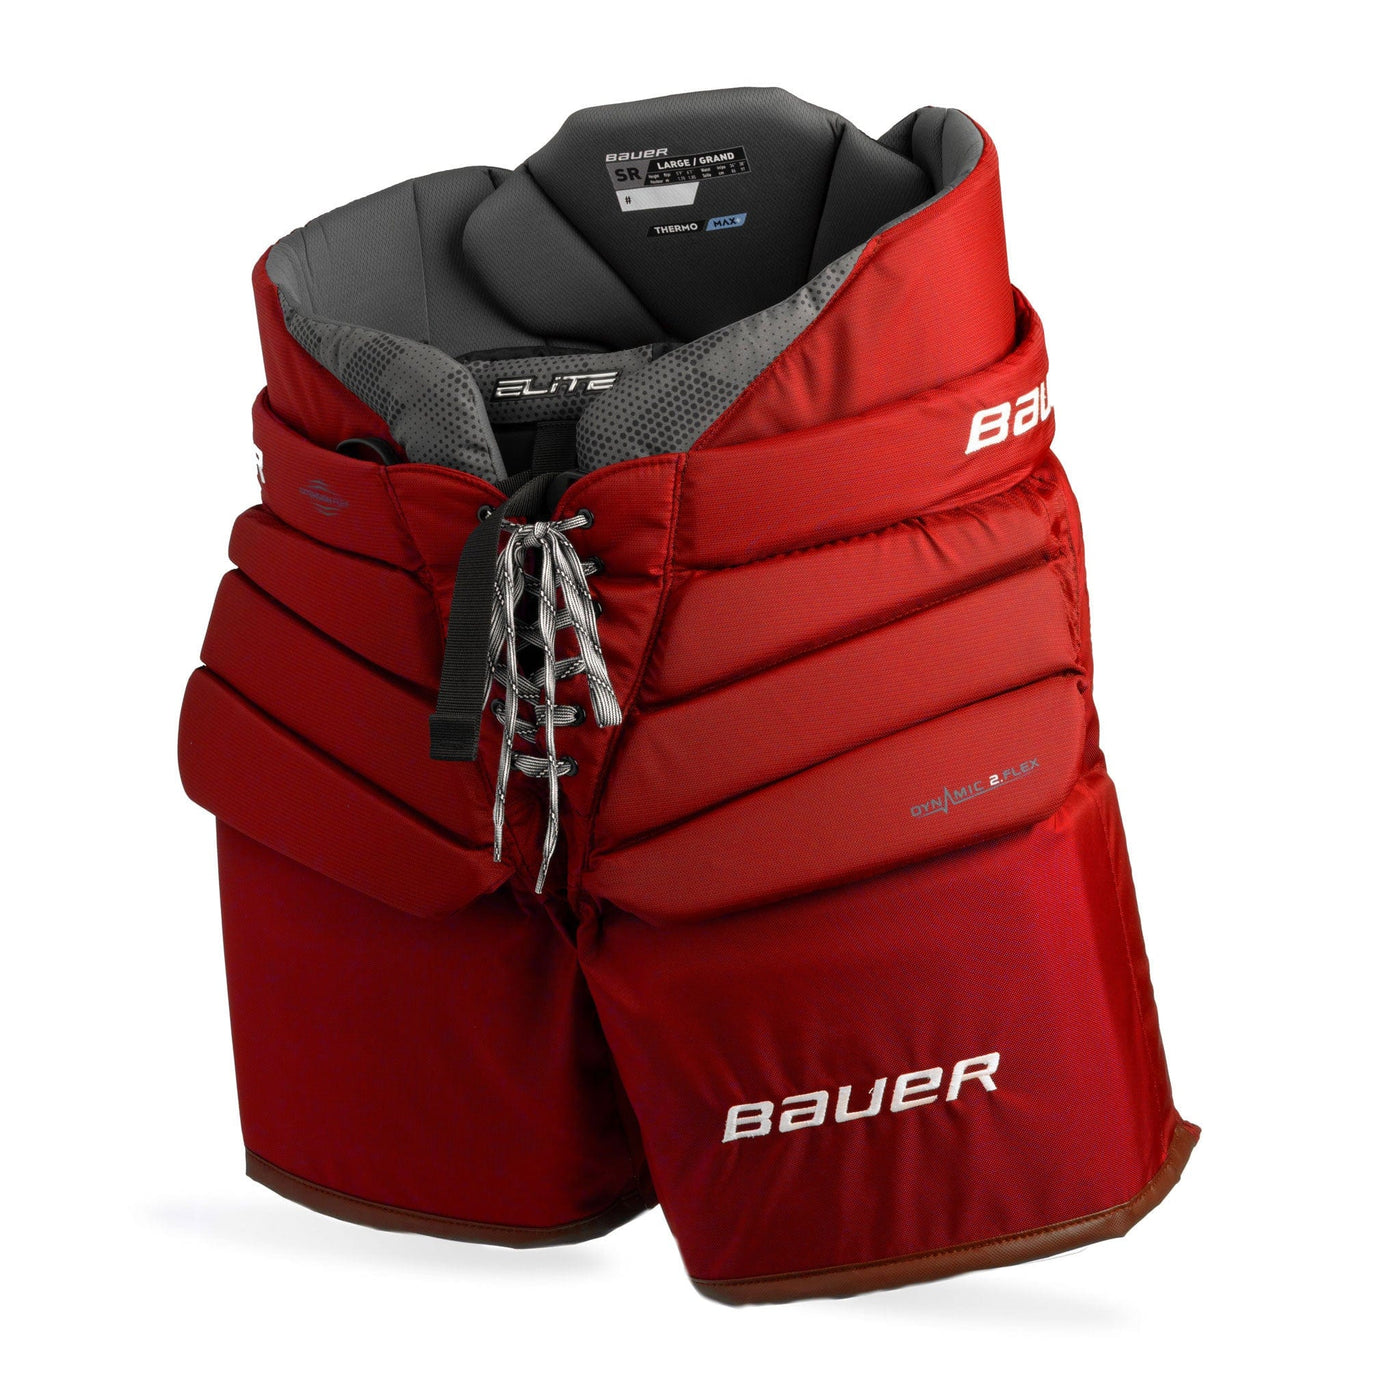 Bauer Elite Intermediate Goalie Pants S23 - The Hockey Shop Source For Sports